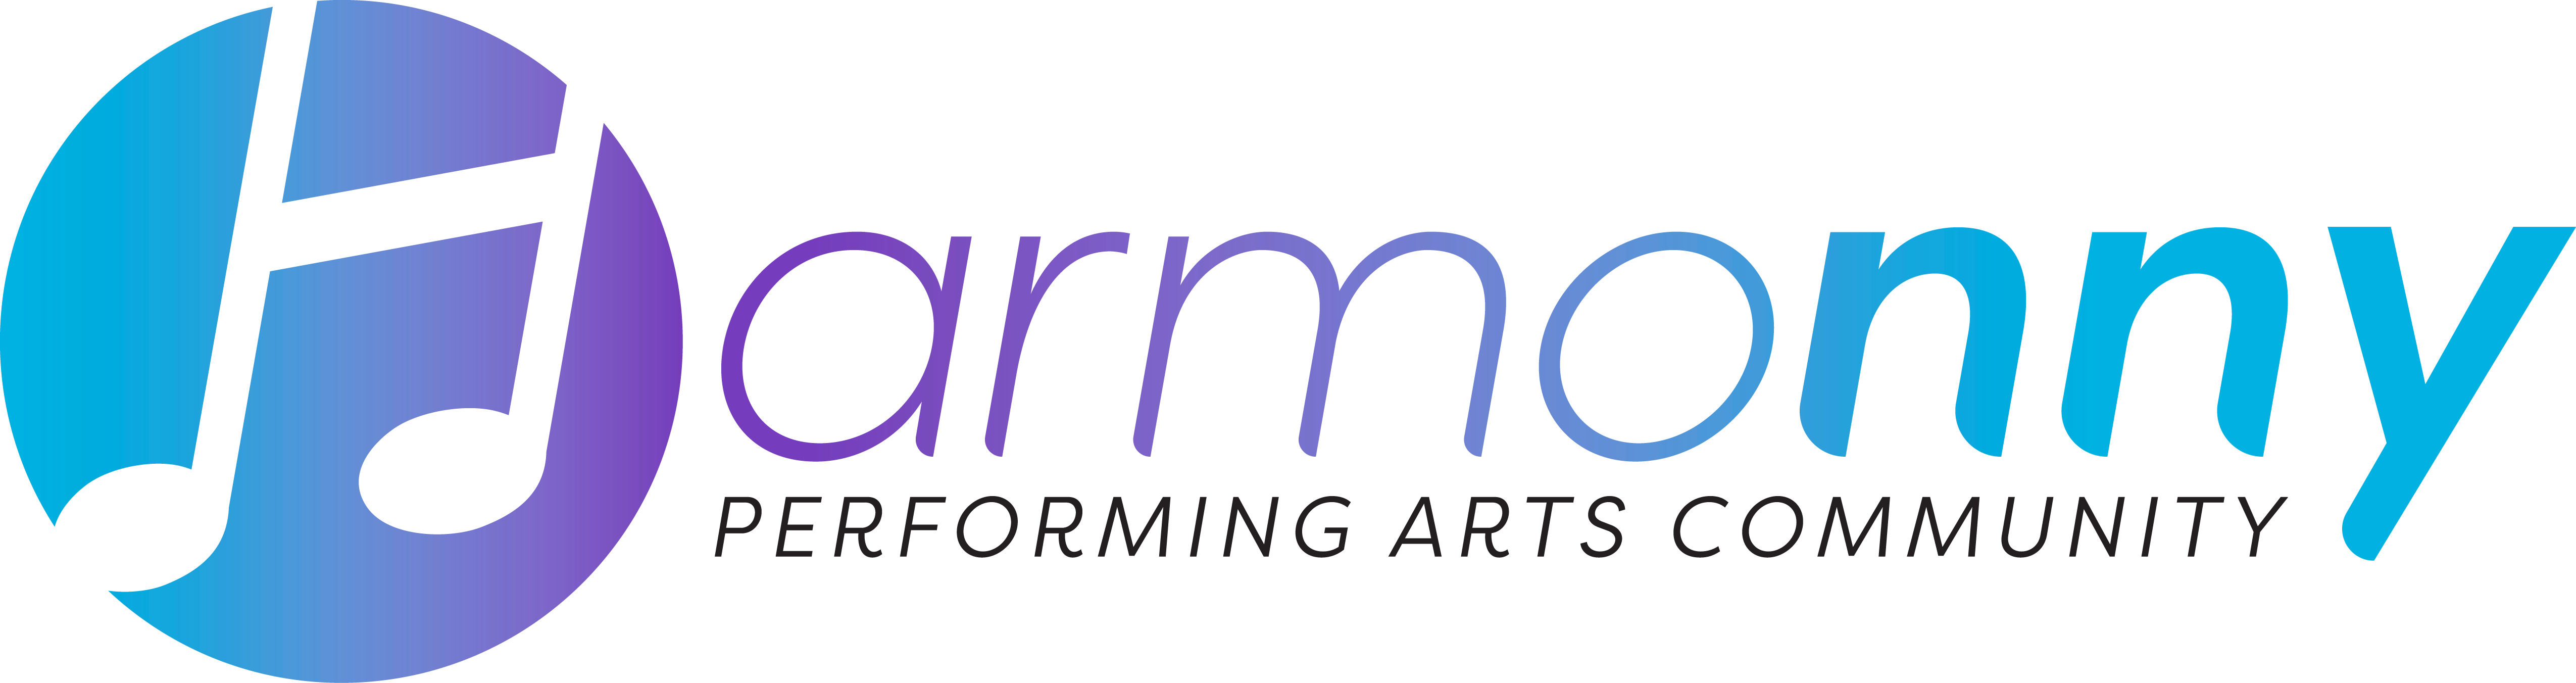 HarmoNNY Performing Arts Community, Inc. logo